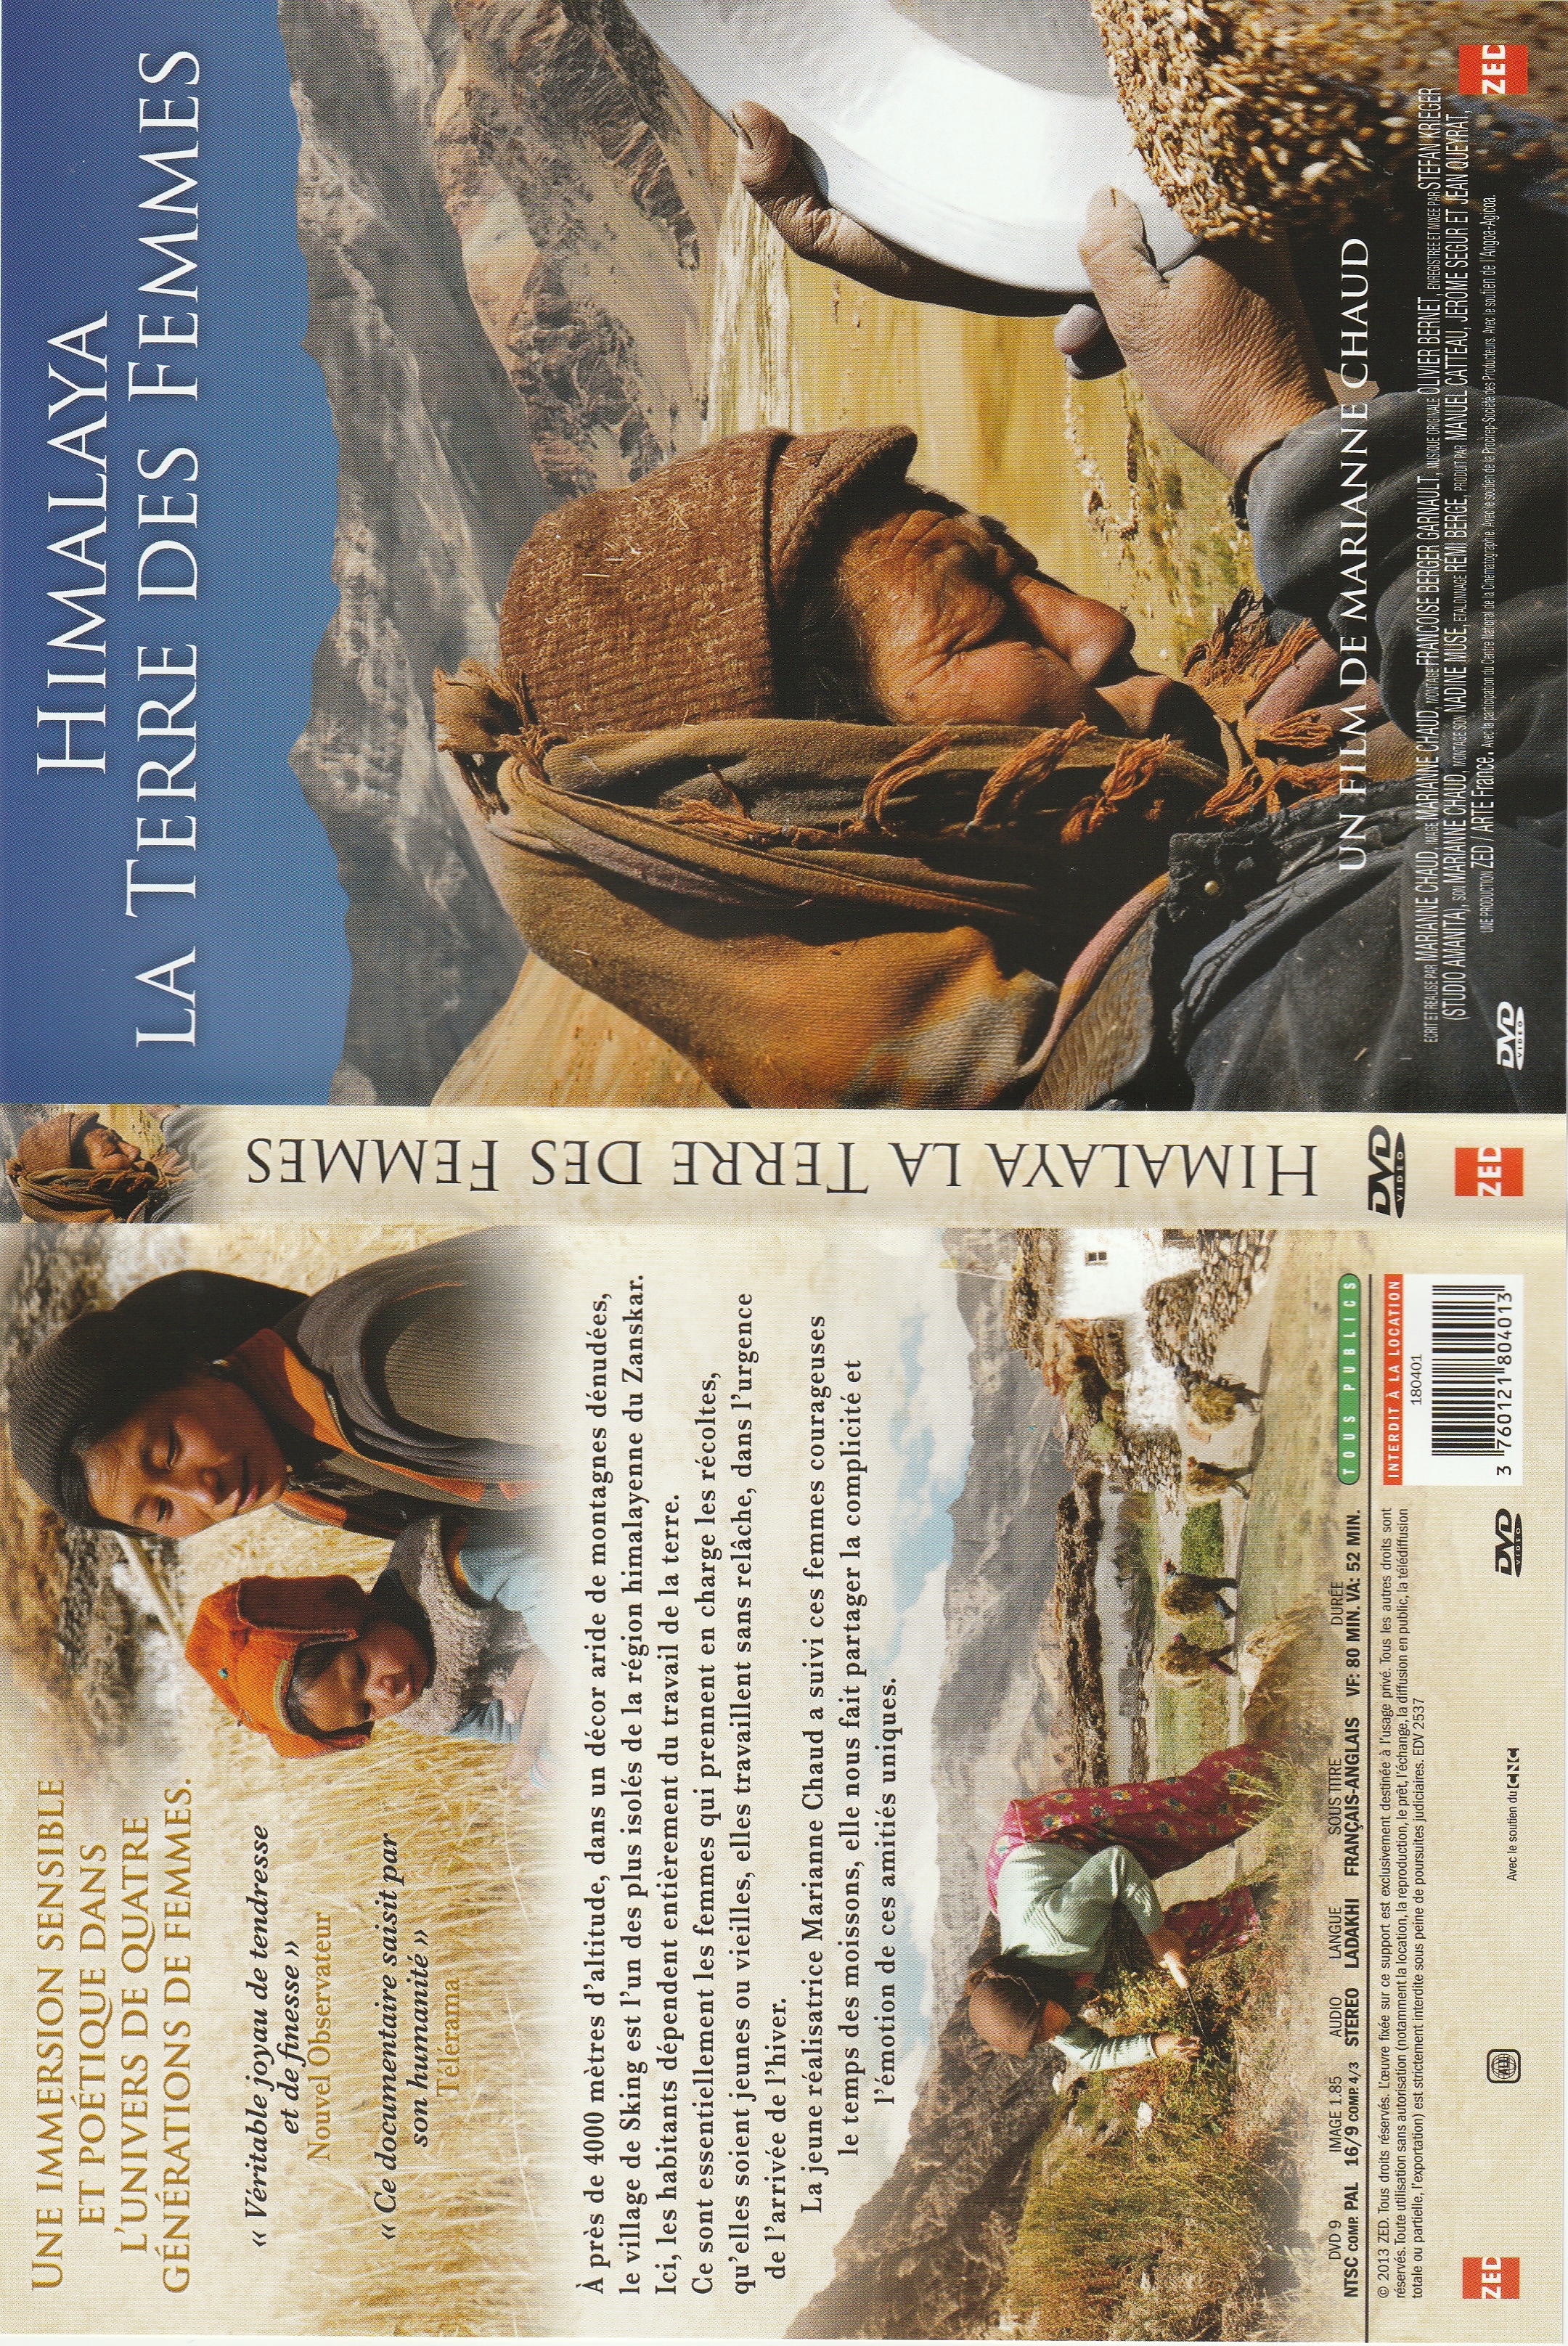 Jaquette DVD Himalaya La terre des femmes